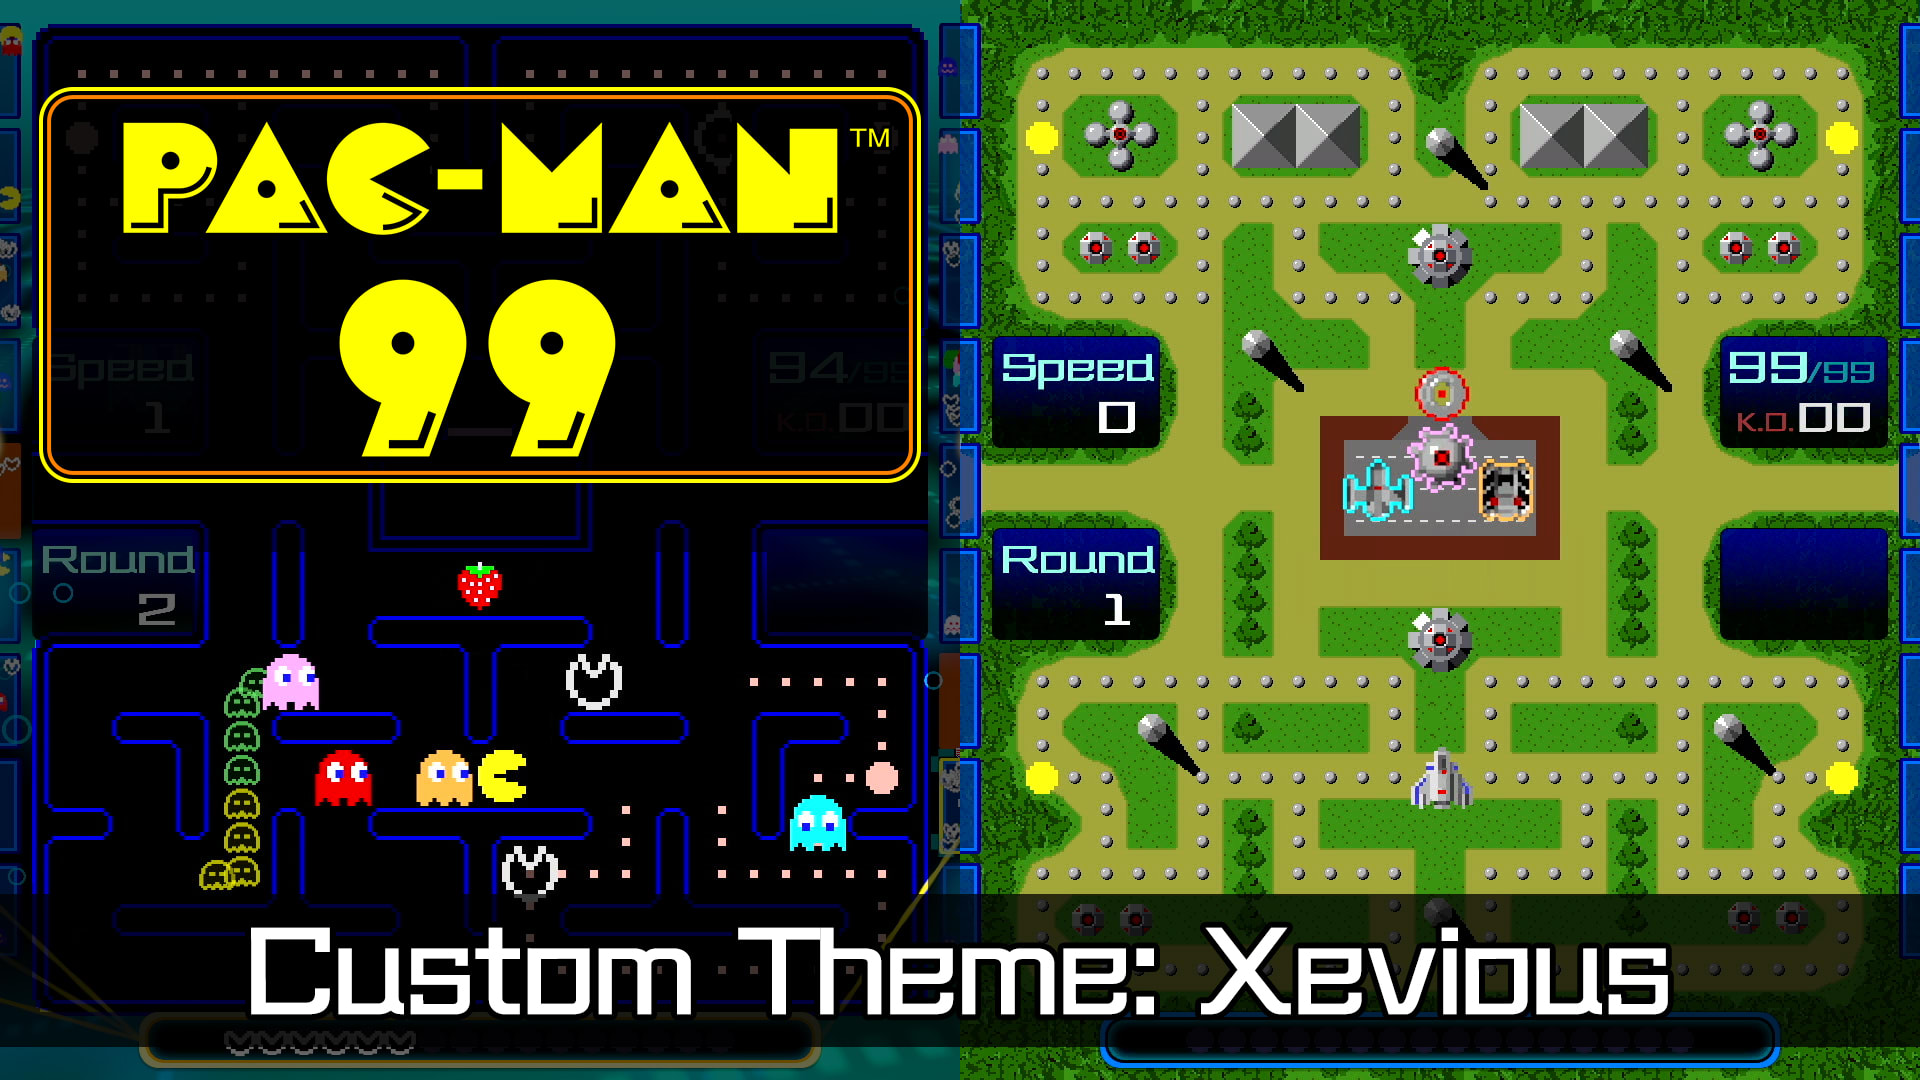 PAC-MAN™ 99 Custom Theme: Xevious